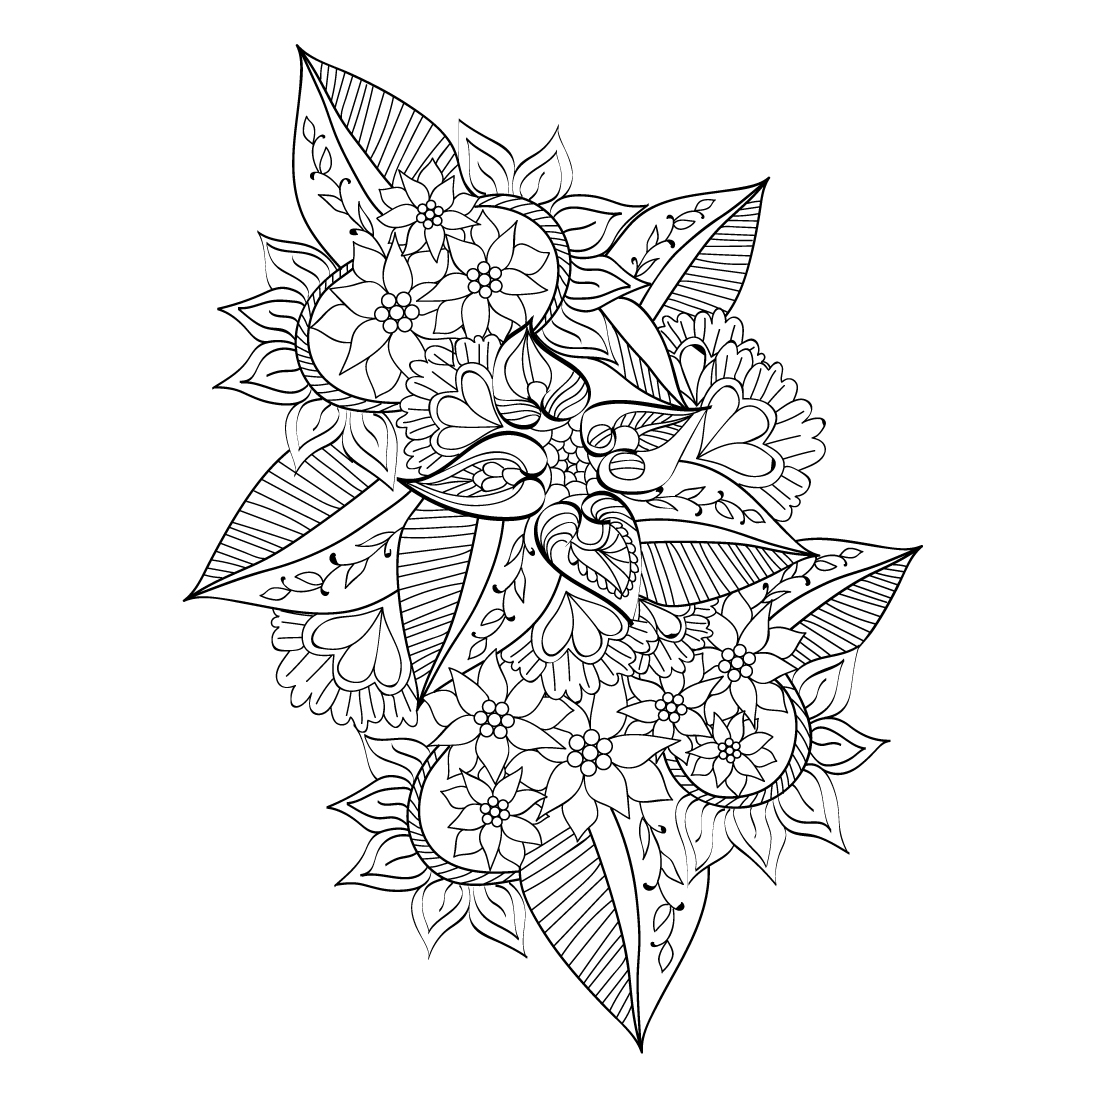 Doodle flower line art, floral illustration, pencil art, decorative floral elements, vector sketch cover image.